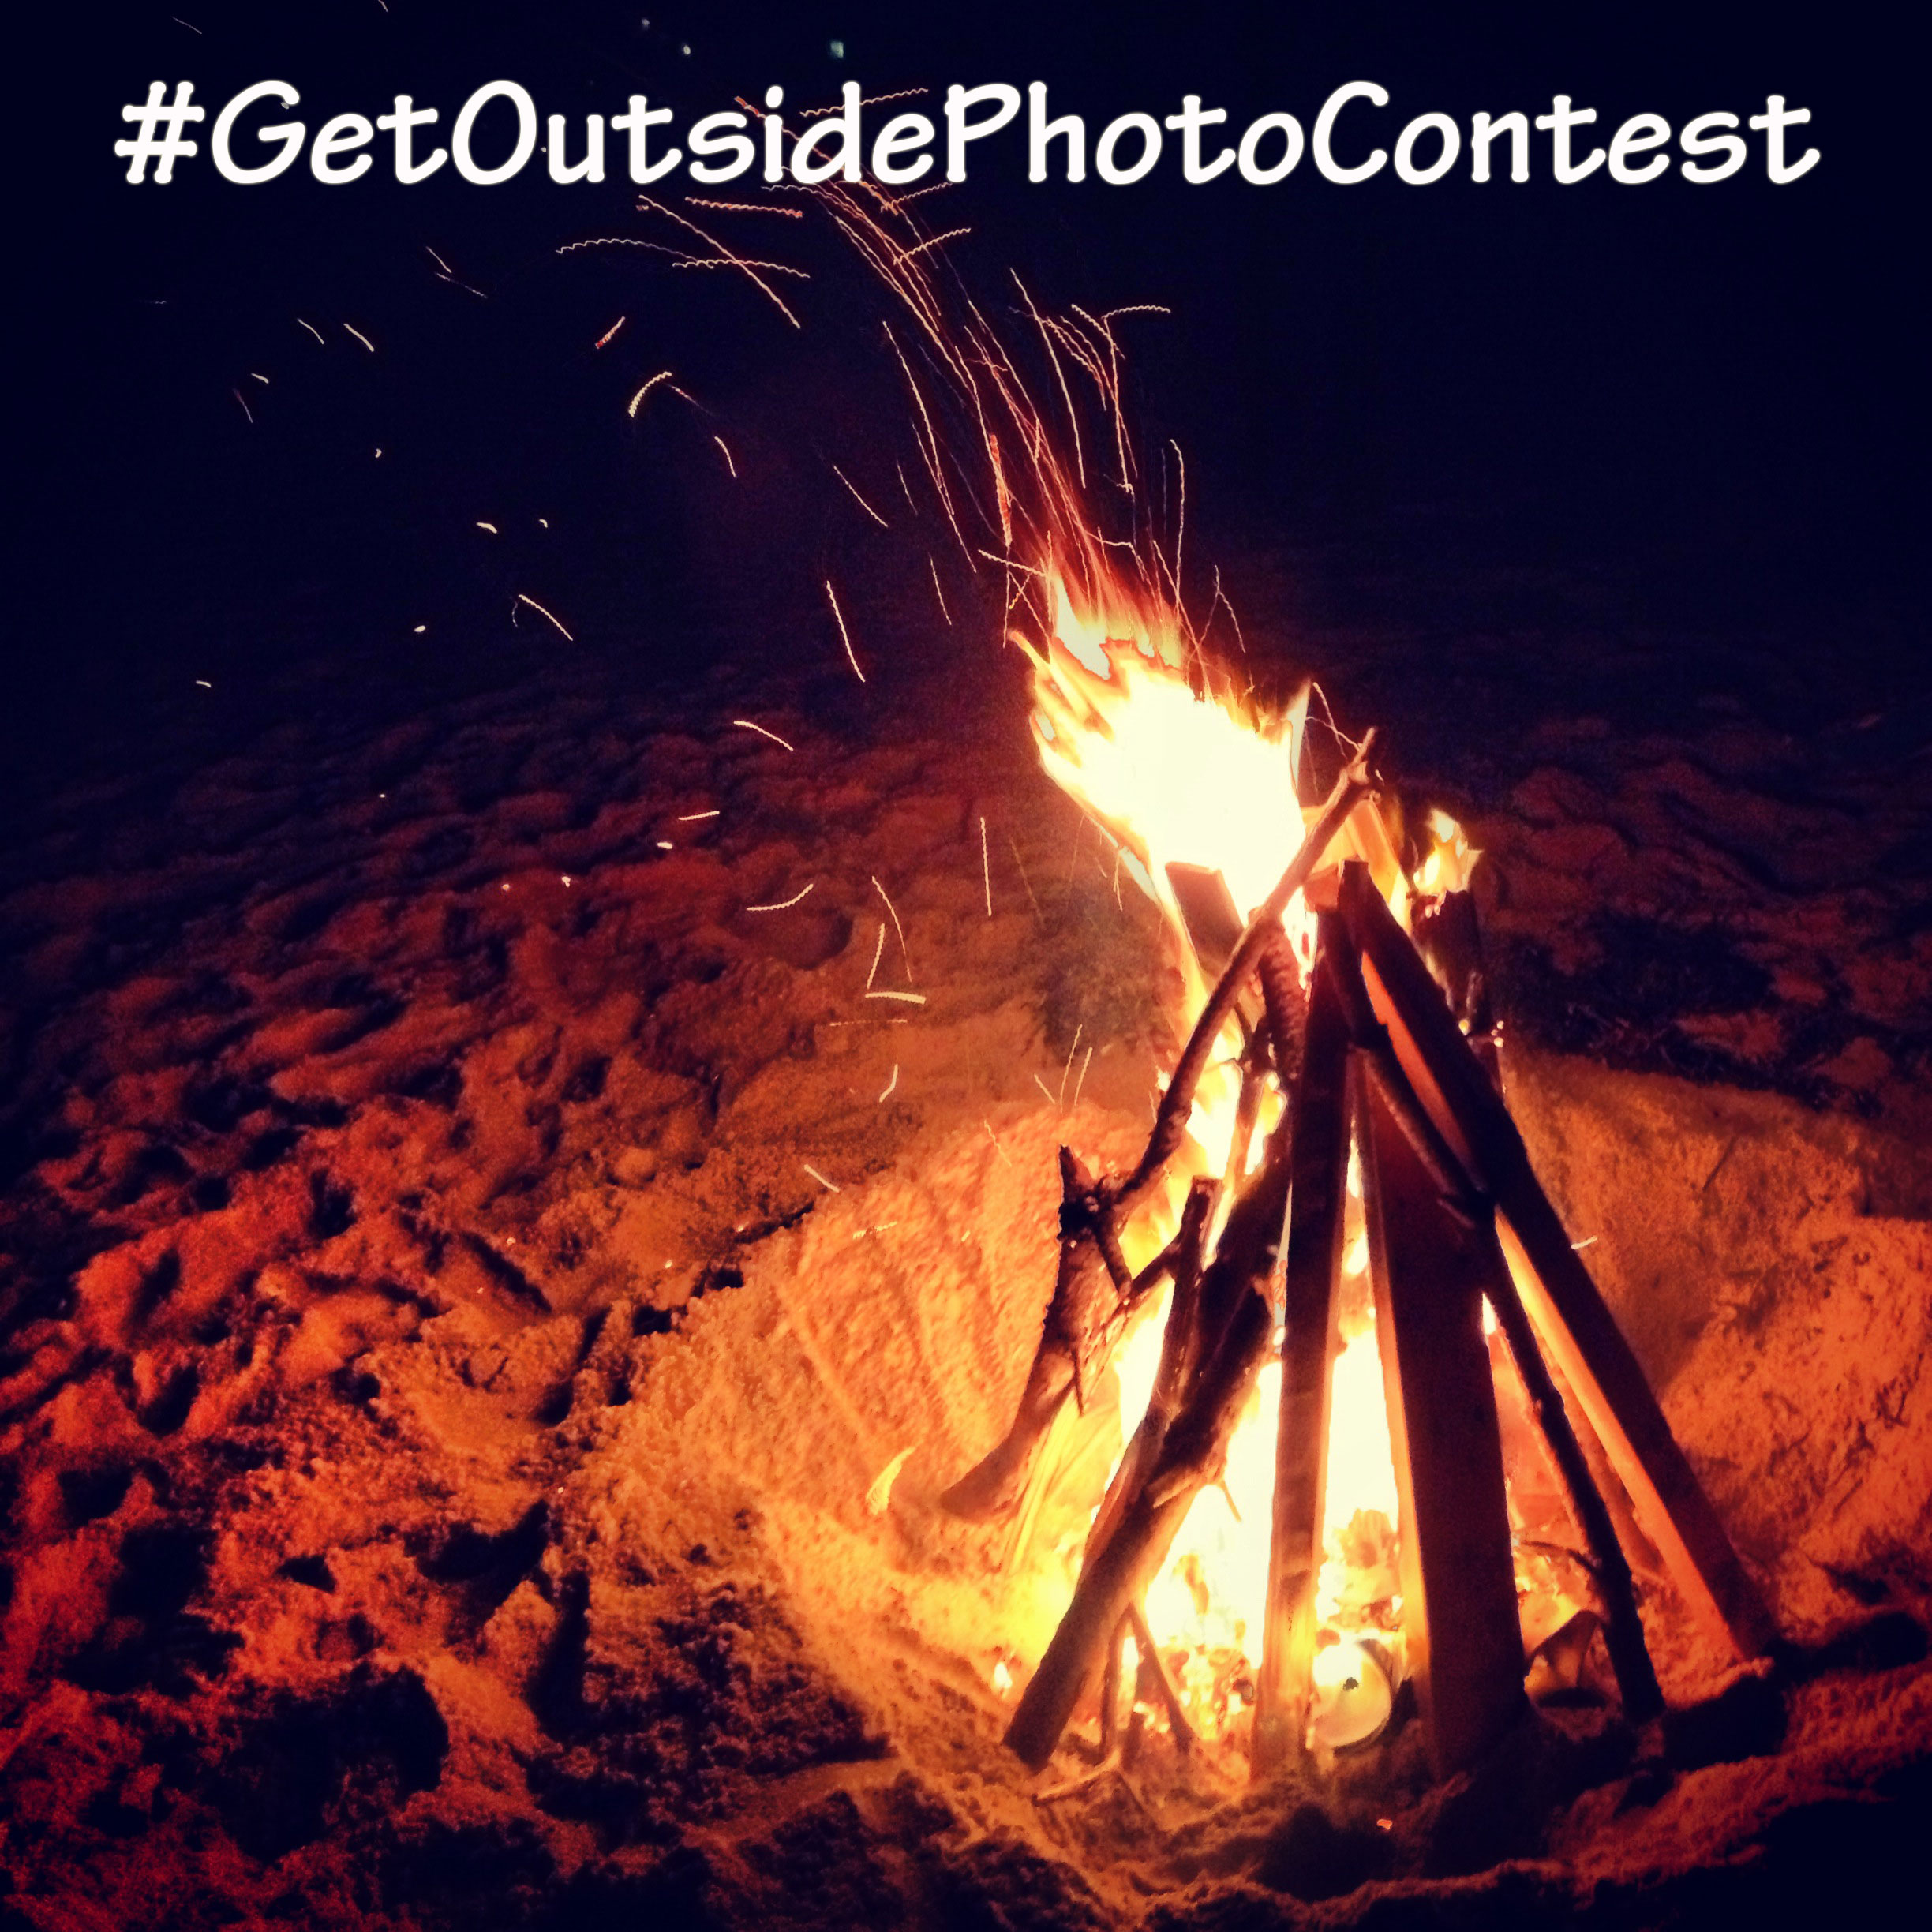 Beach bonfire in Cape Cod, MA with #getoutsidephotocontest